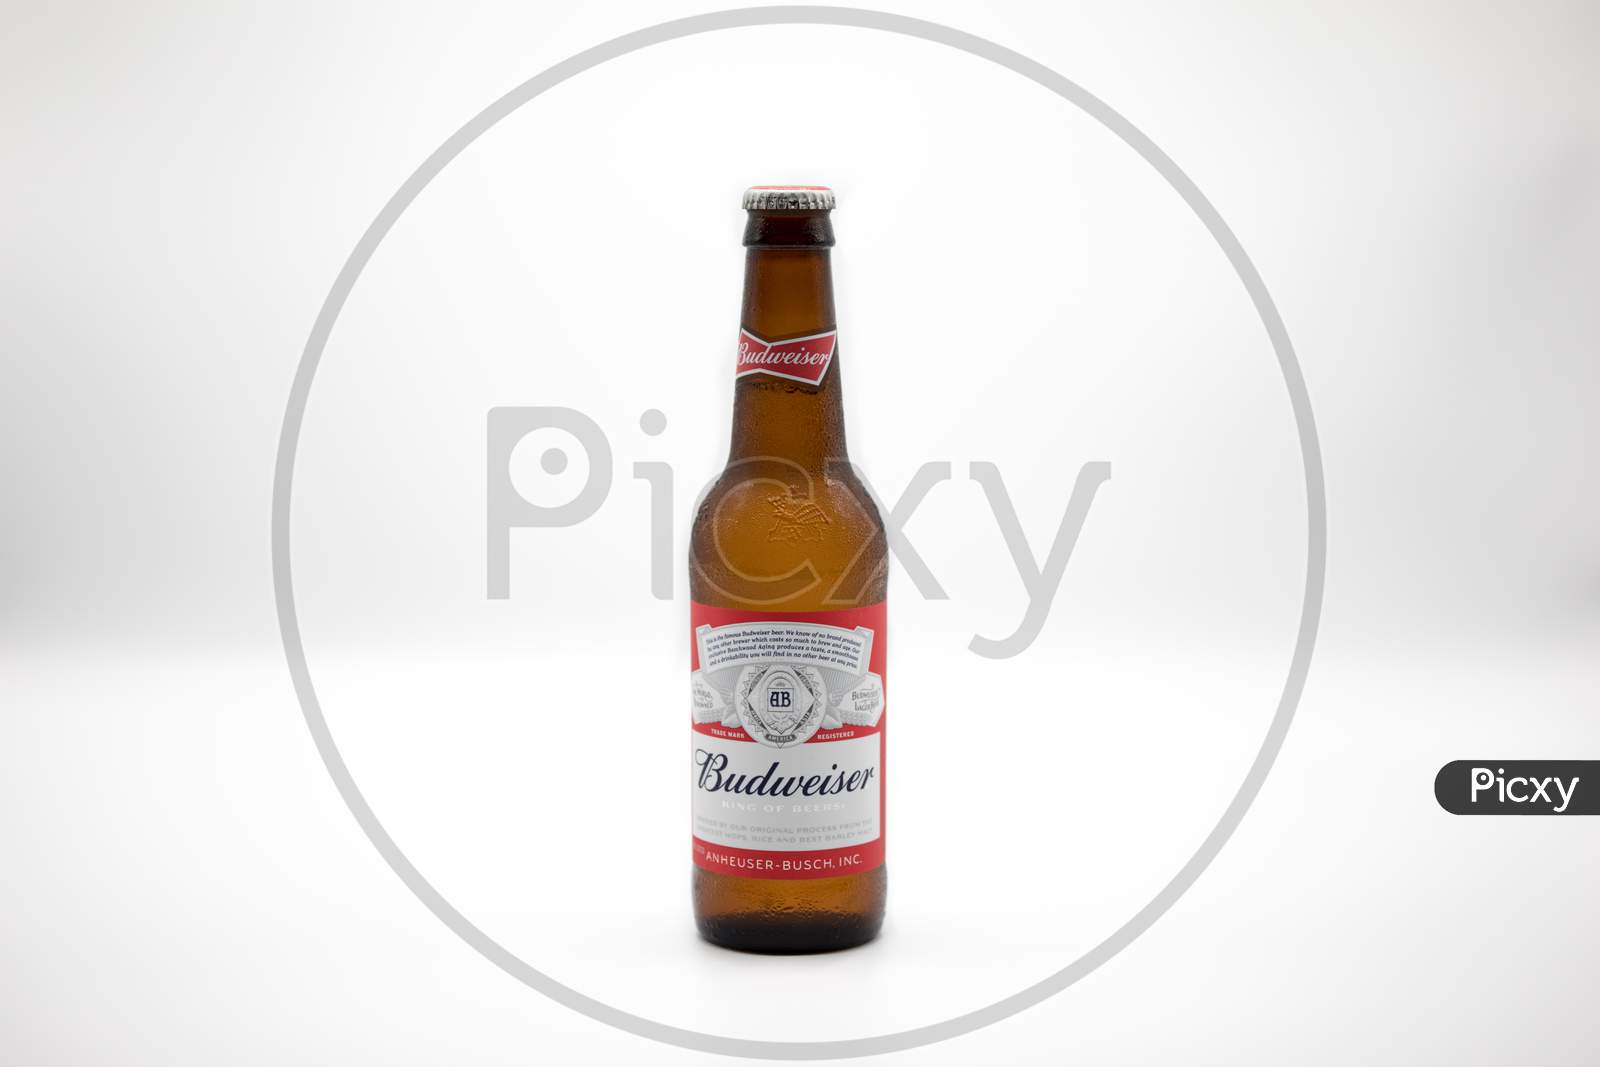 Bottle of Budweiser beer on white background